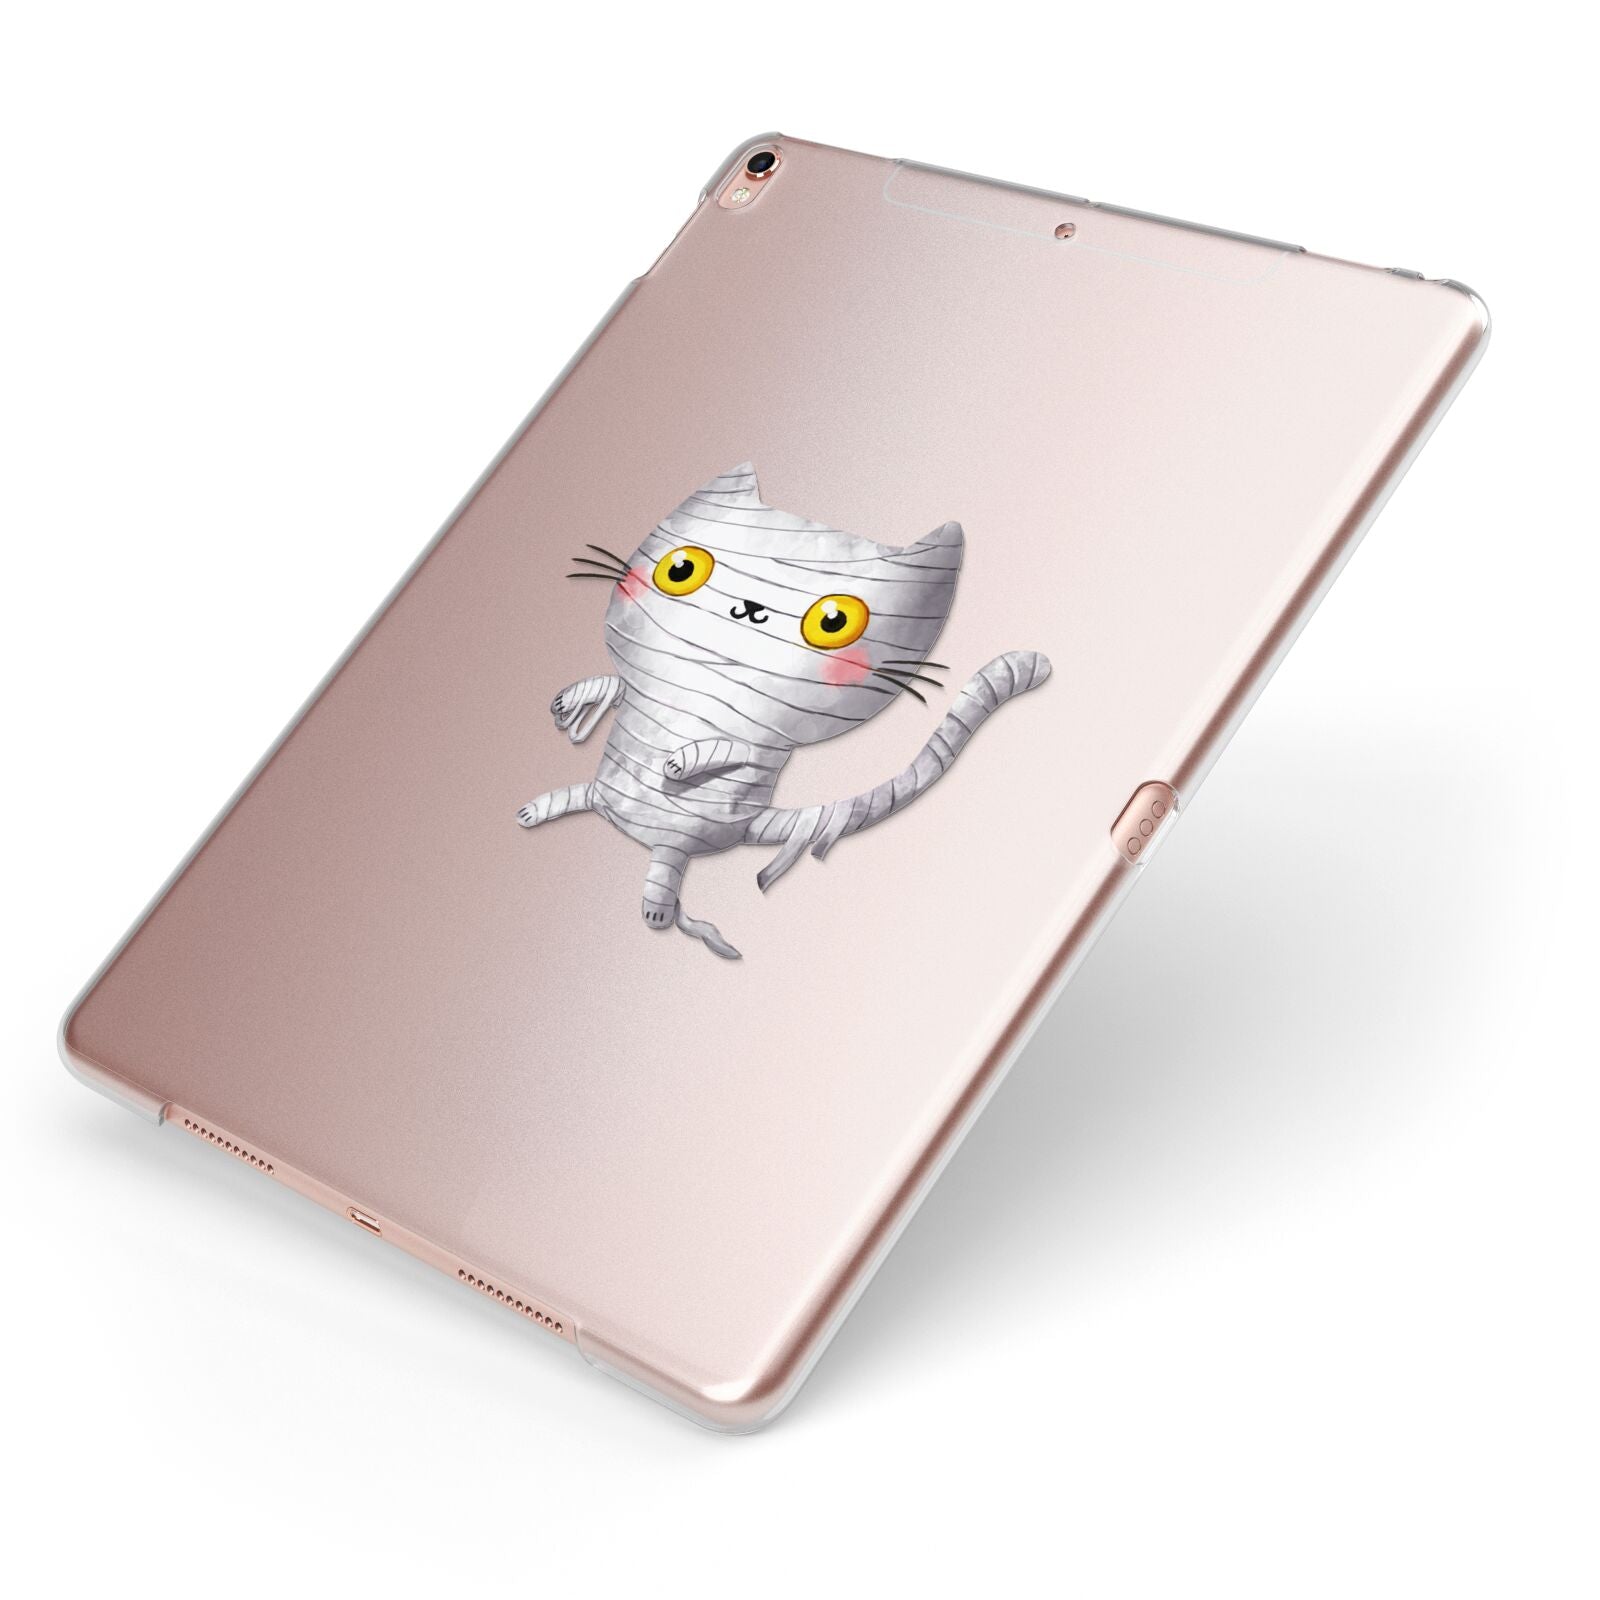 Mummy Cats Apple iPad Case on Rose Gold iPad Side View